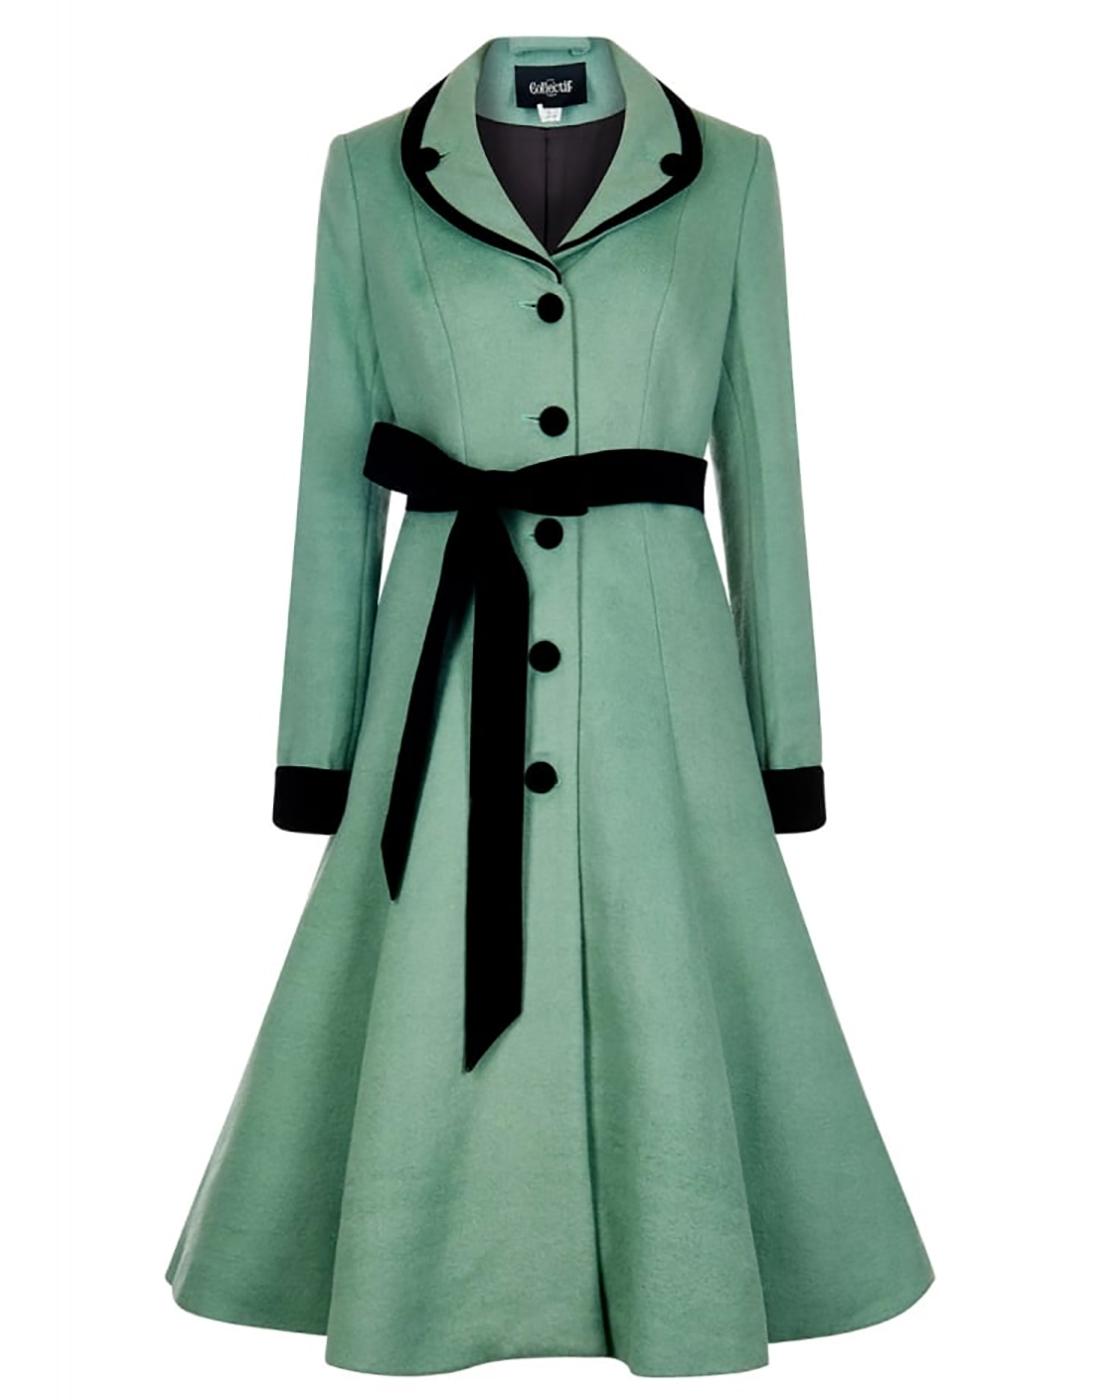 Imma COLLECTIF Retro 50s Vintage Princess Coat